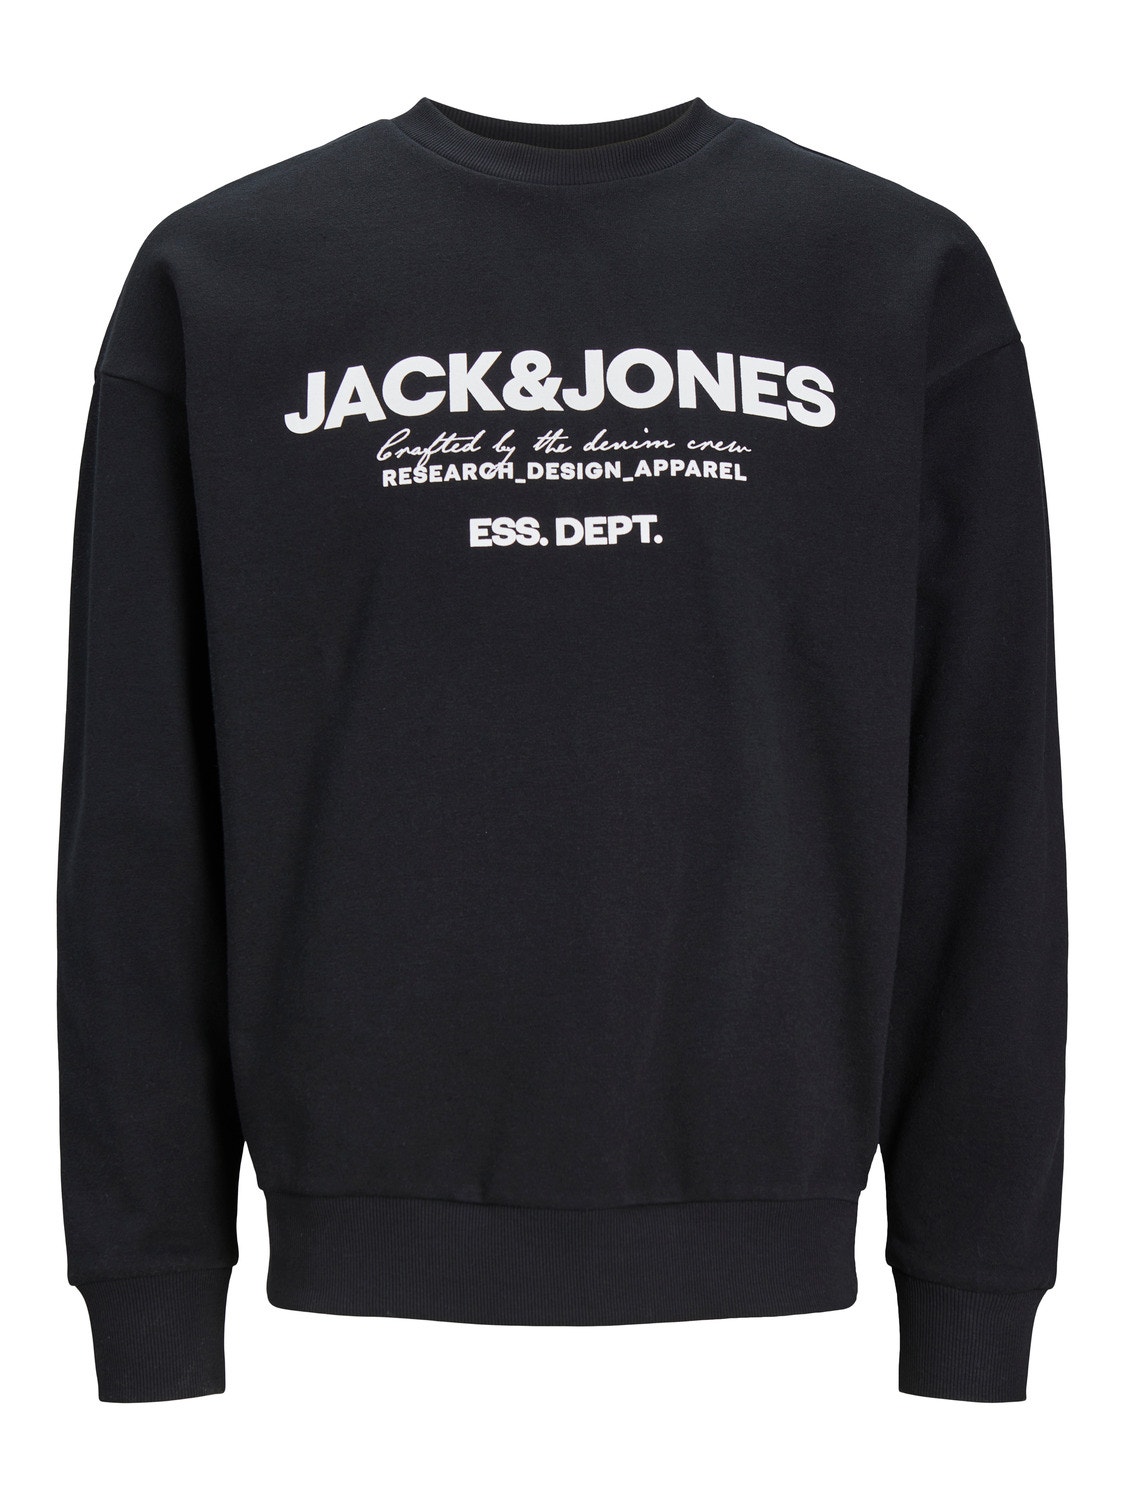 Jack & Jones Logo Crewn Neck Sweatshirt -Black - 12249273